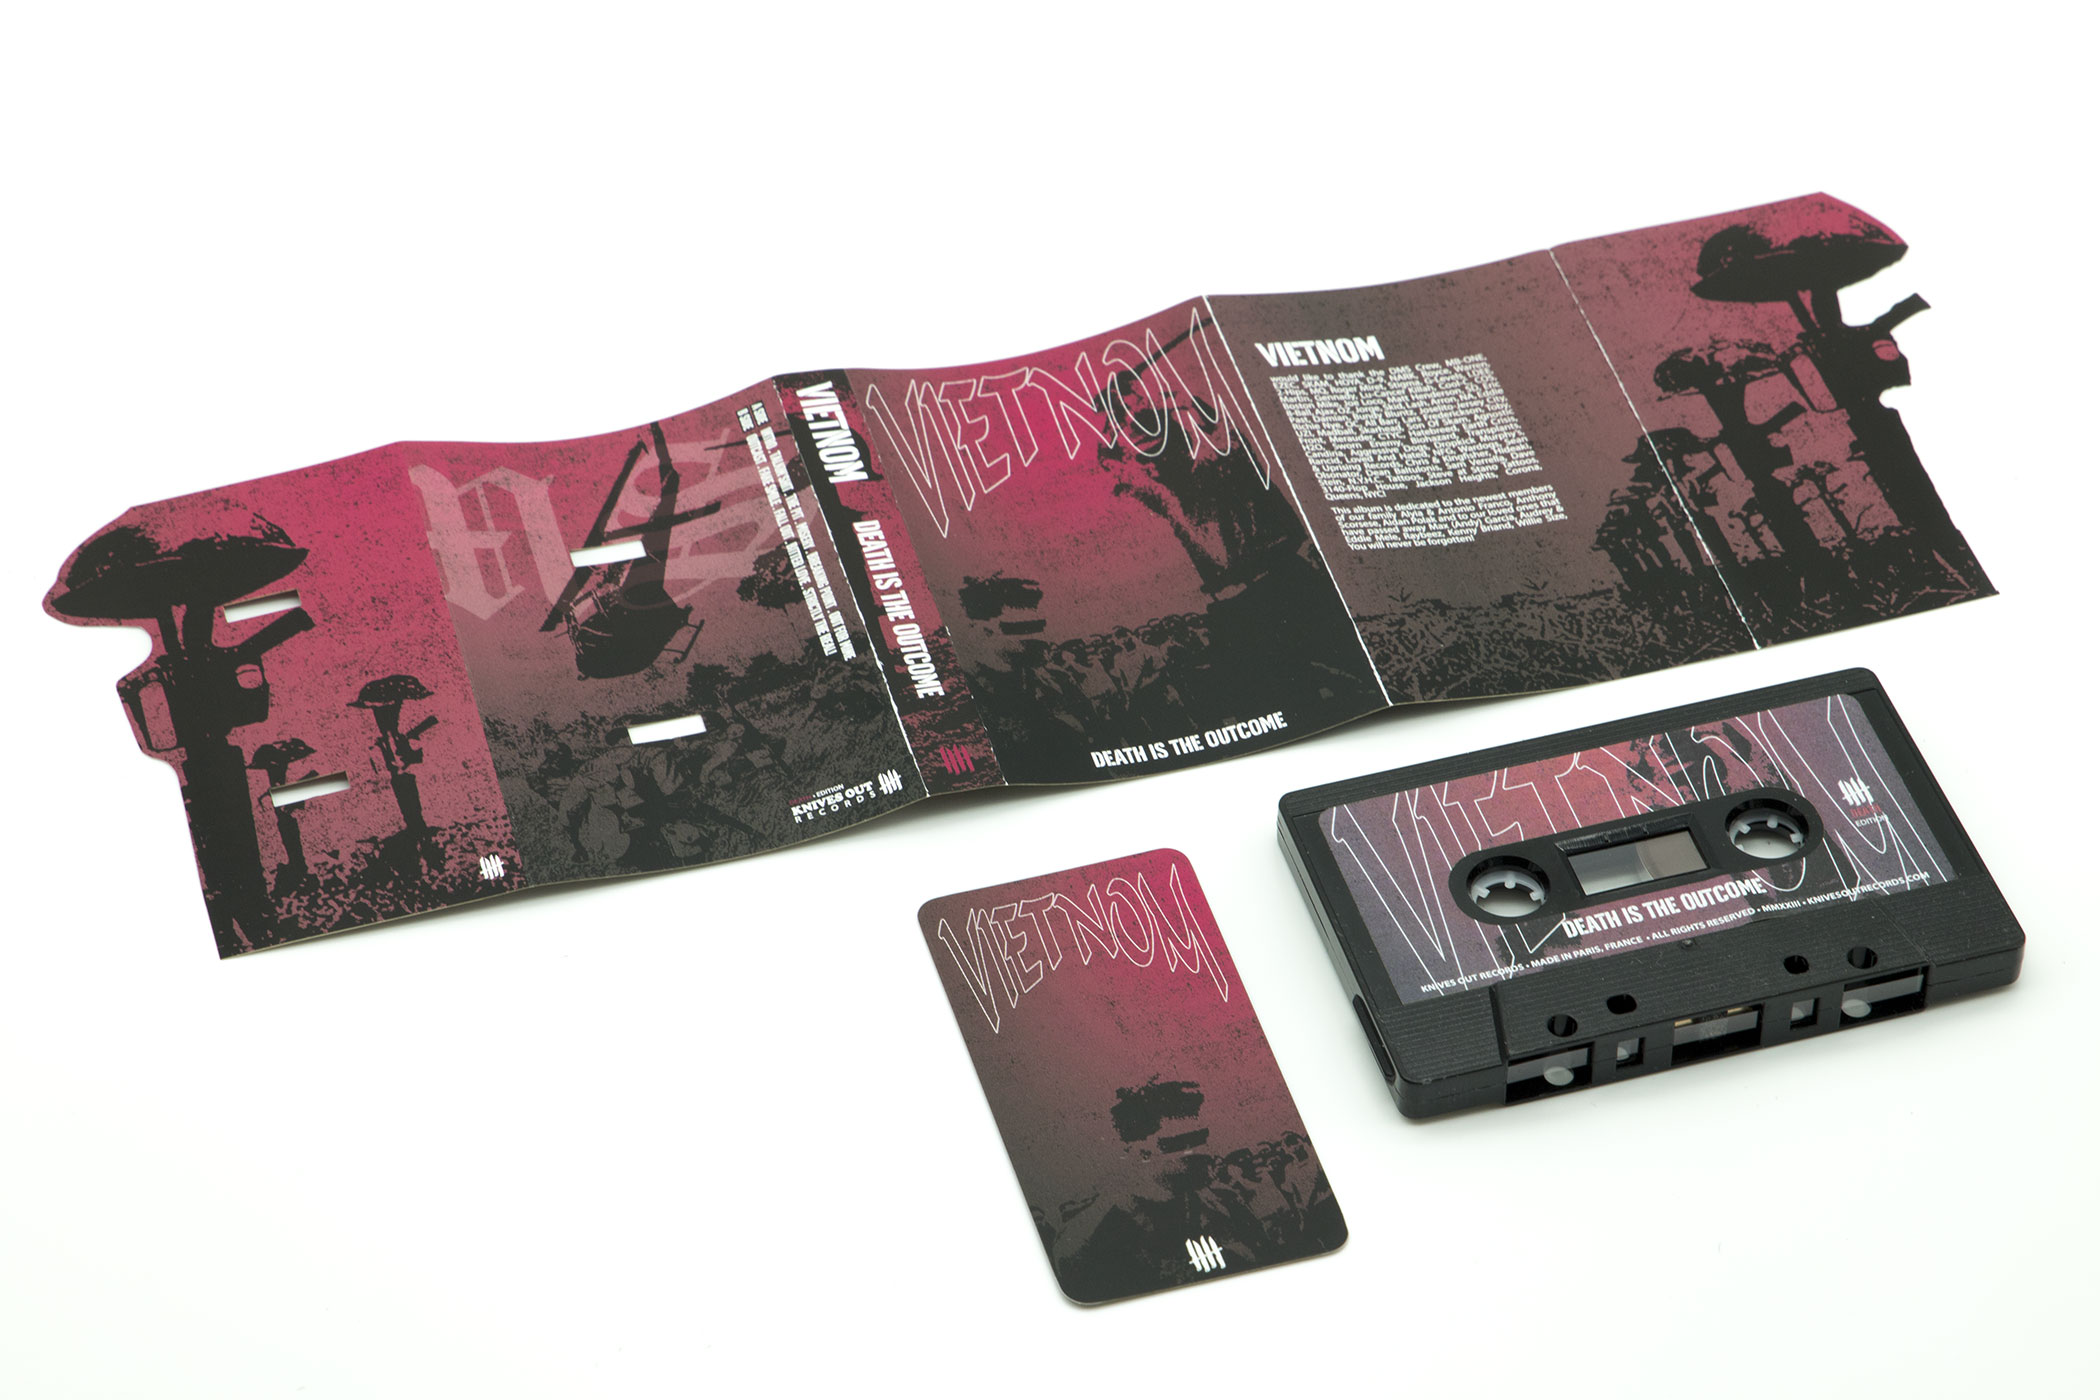 VIETNOM "Death Is The Outcome" cassette tape edition